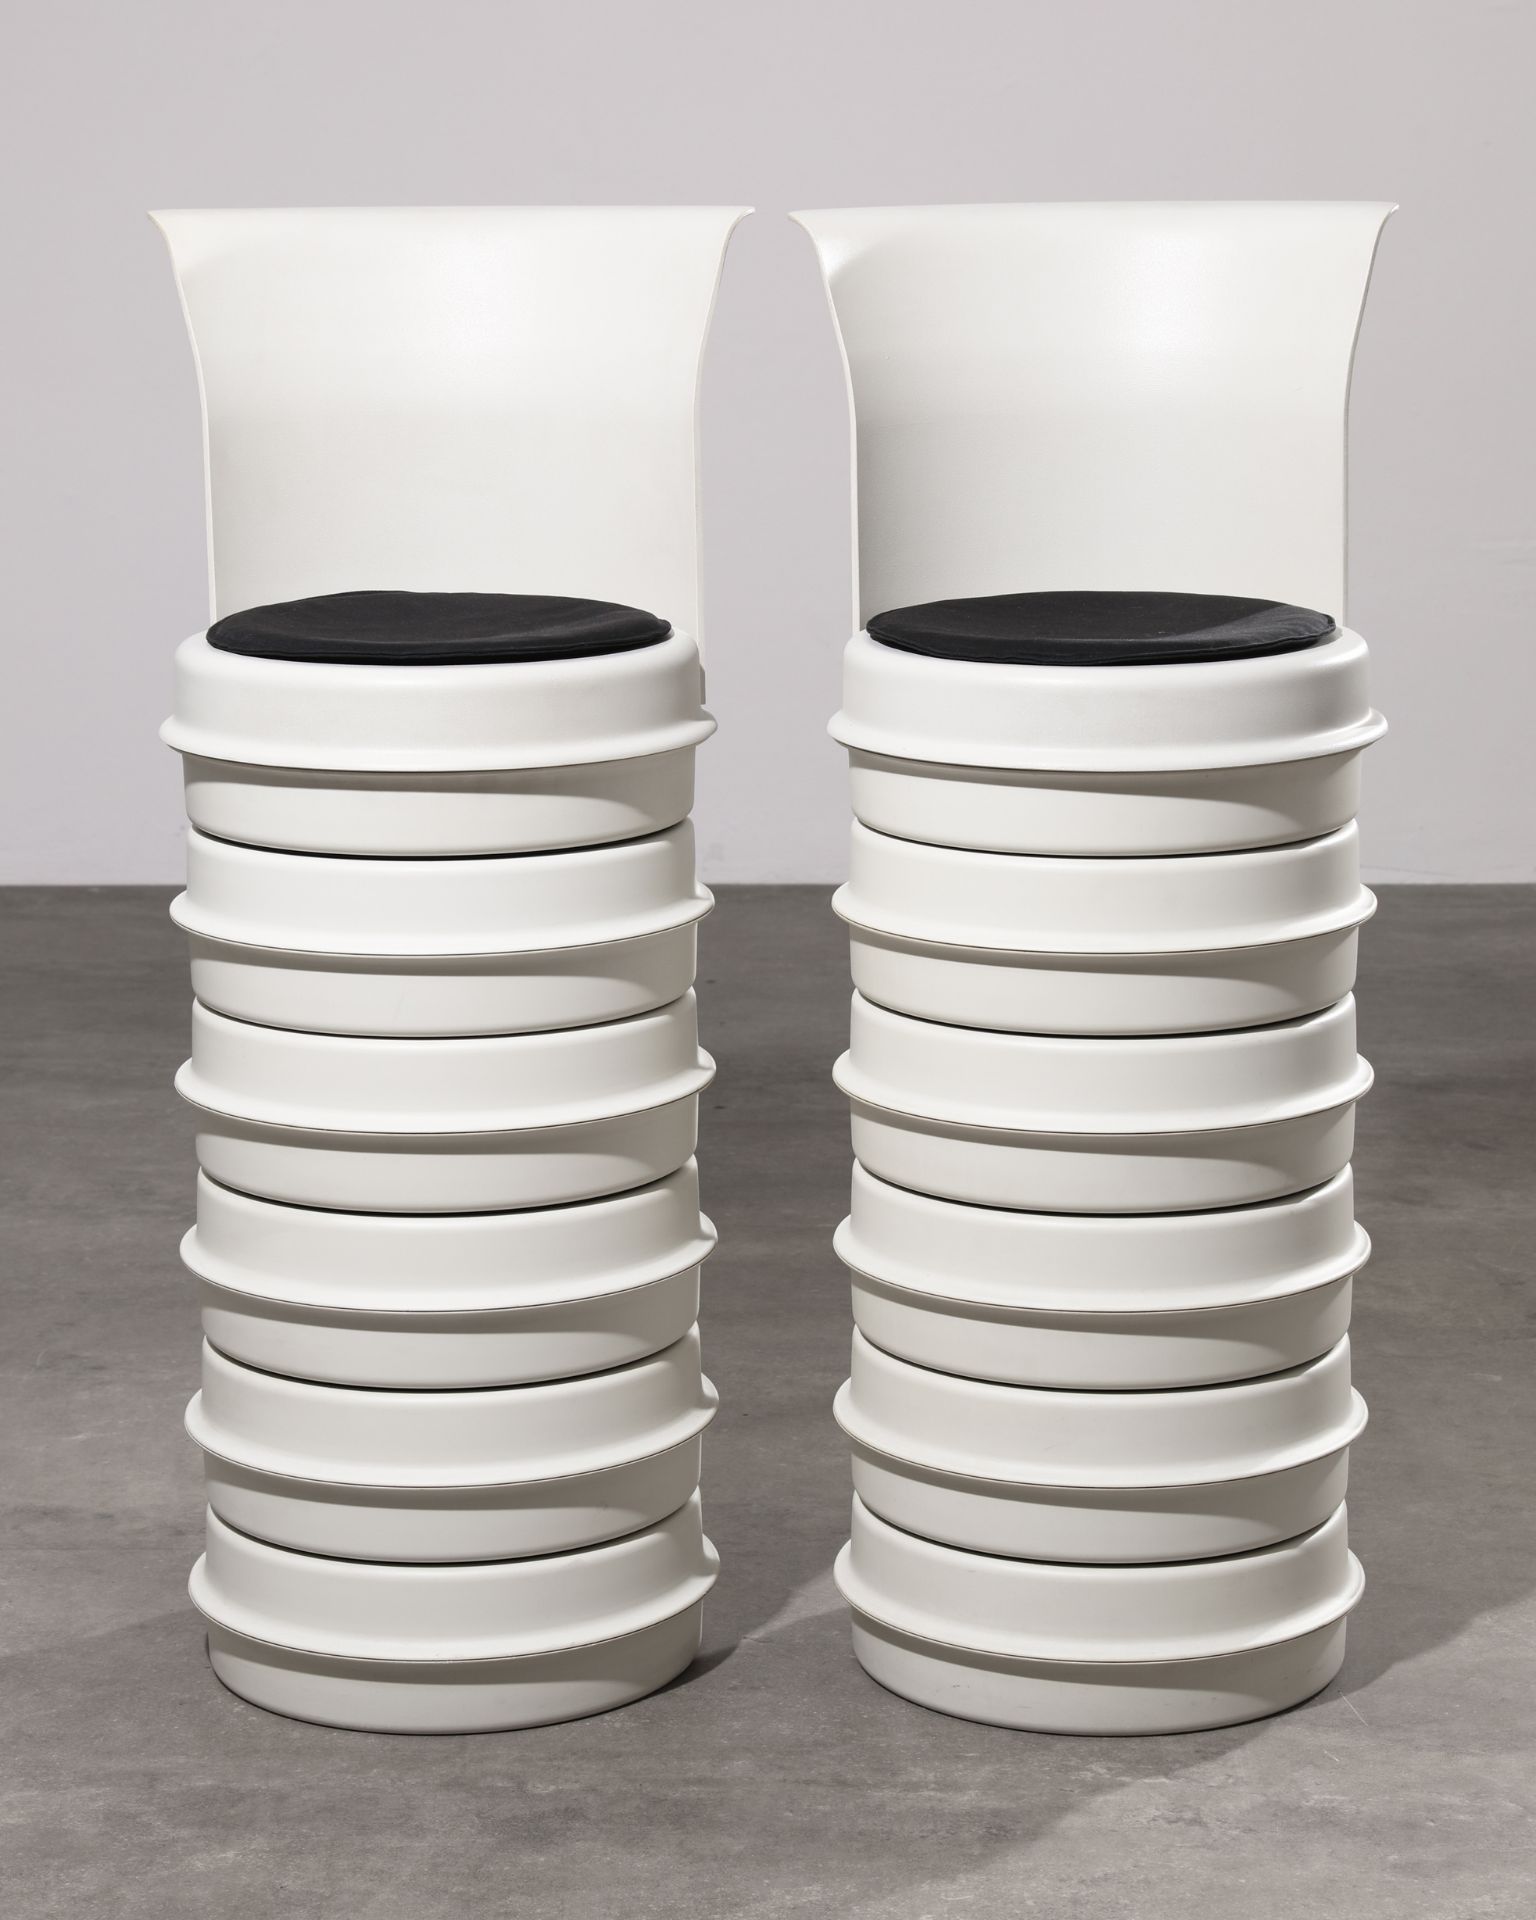 Dieter Rams, Vitsoe, 2 bar stools from Stapelprogramm 740 - Image 2 of 5